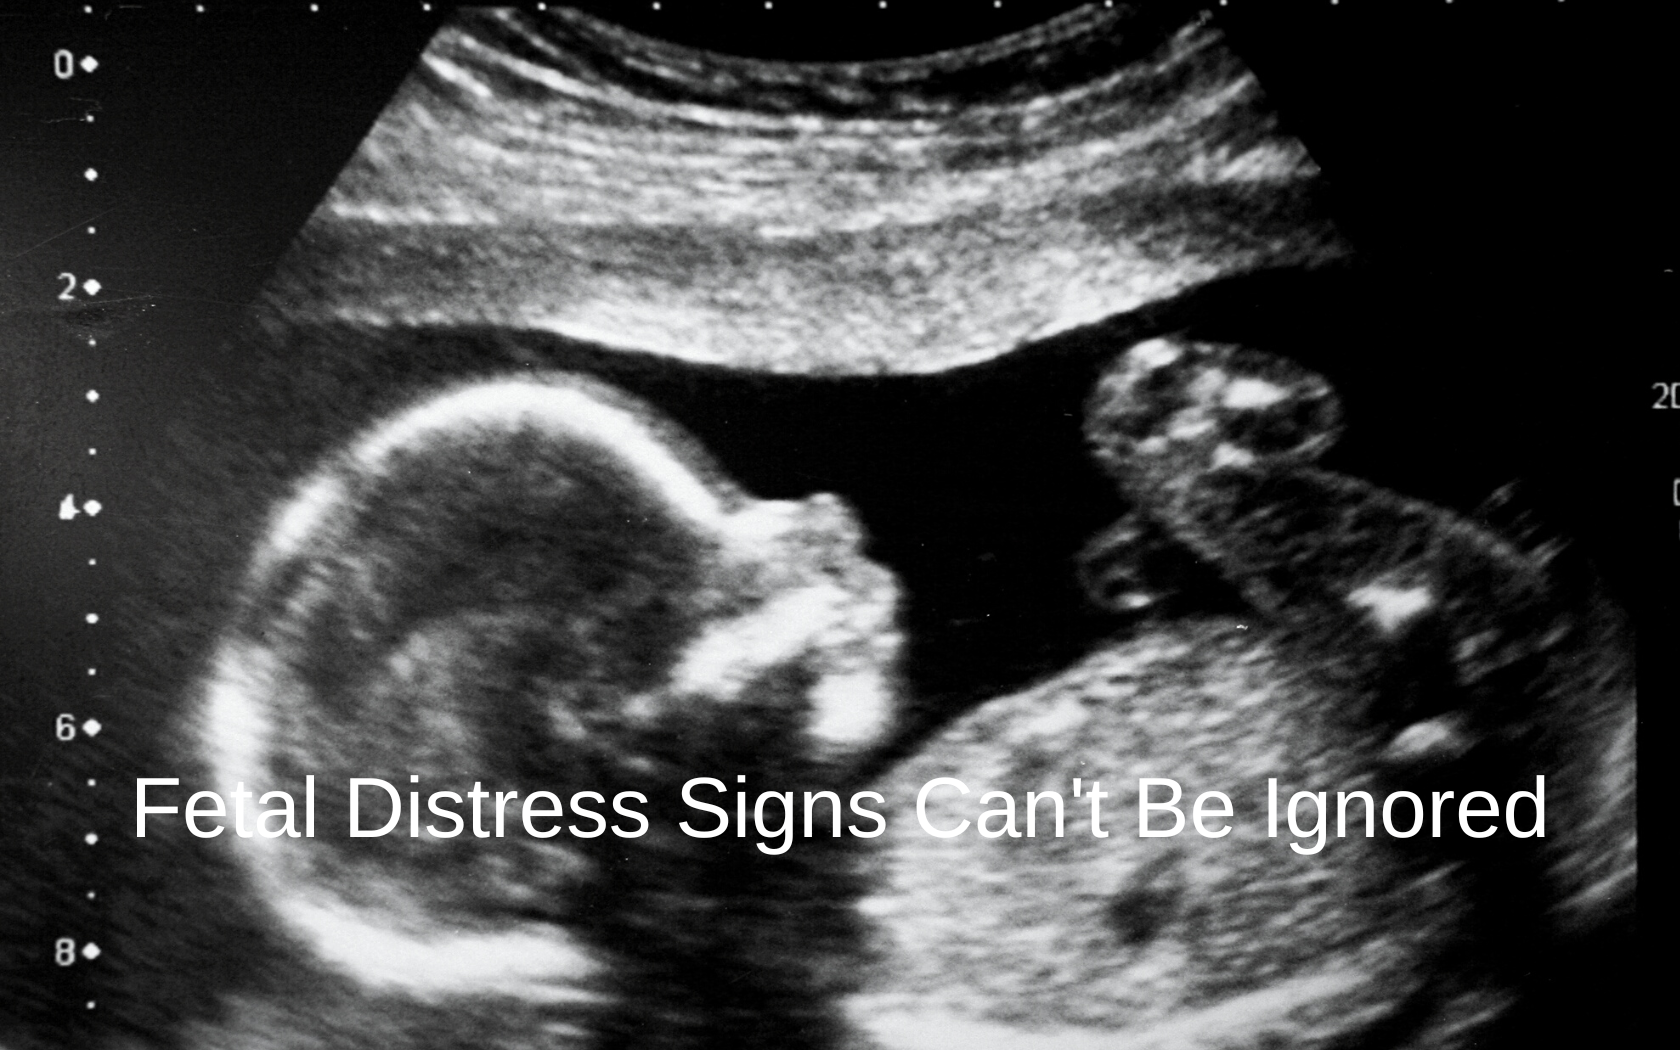 An ultrasound can show fetal distress signs, if present.